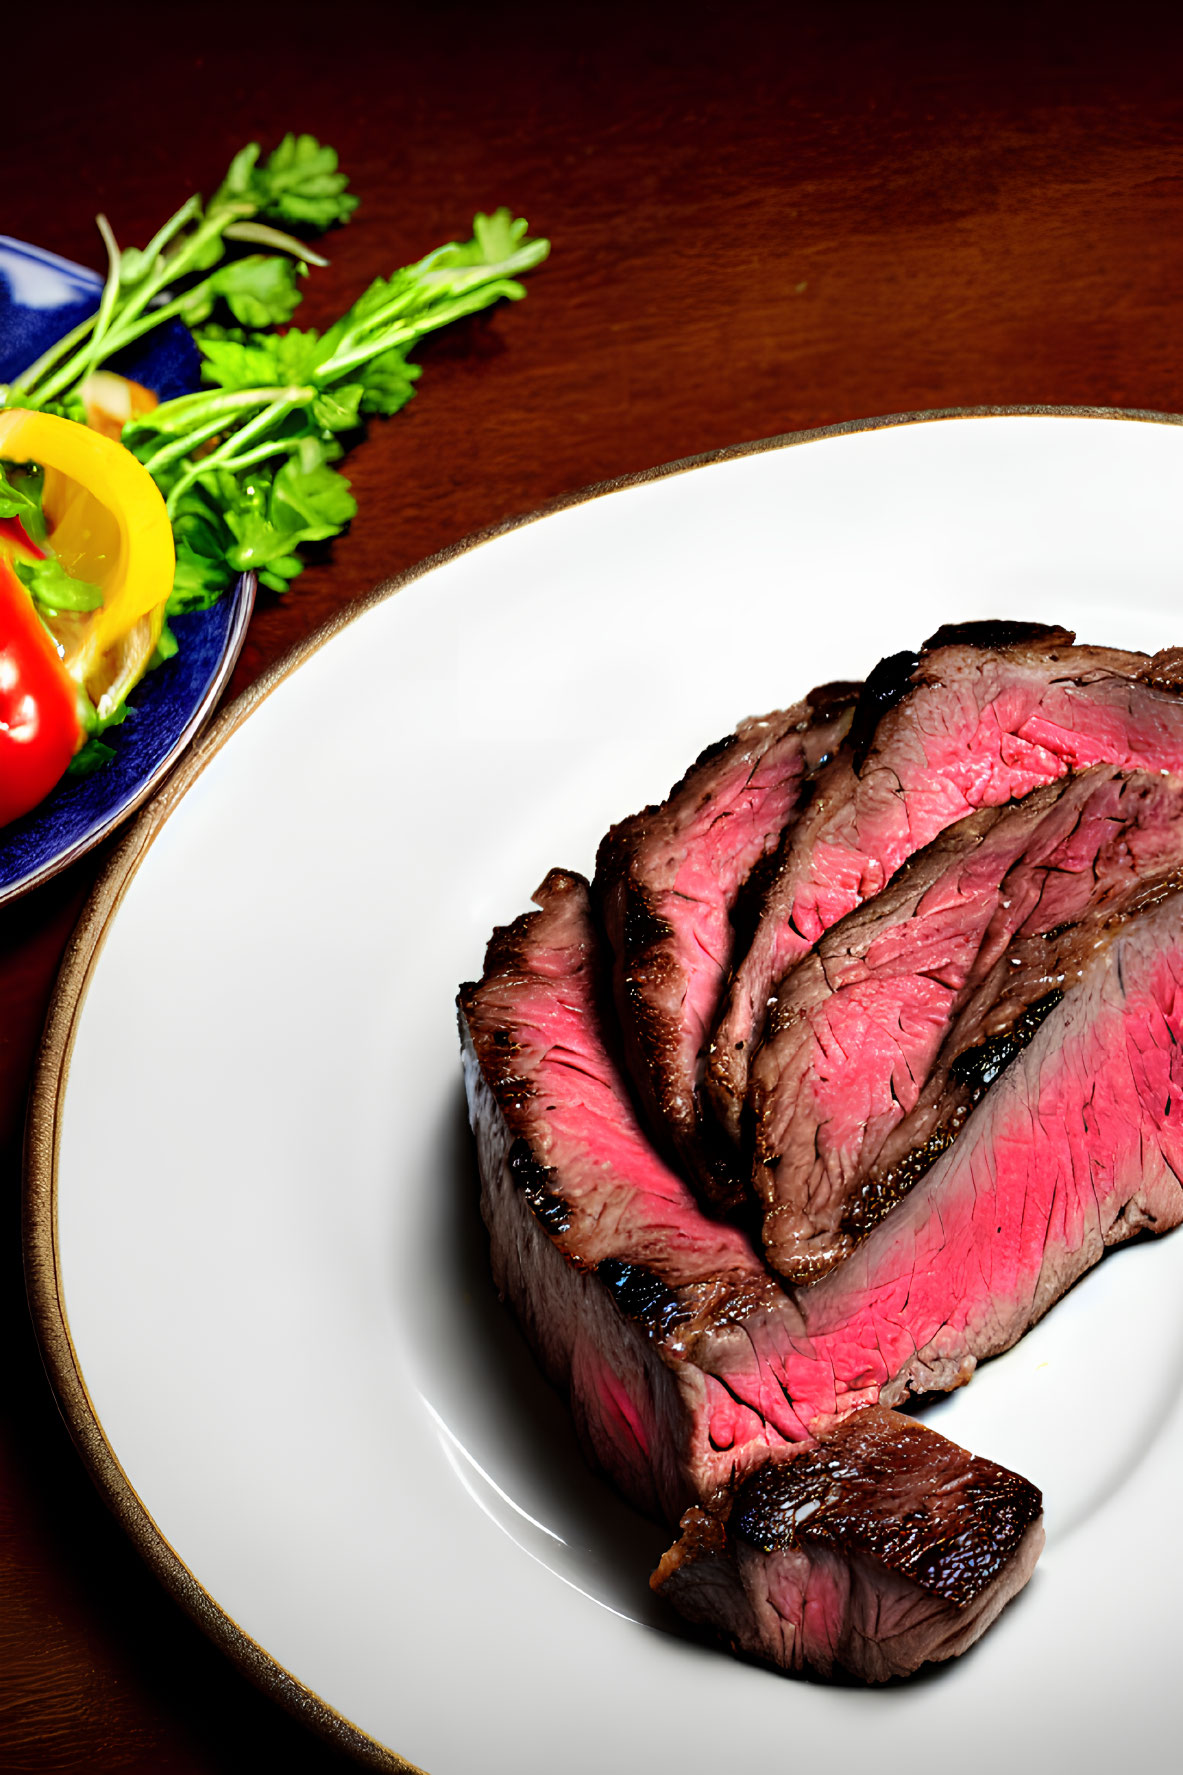 Medium-Rare Steak Slices with Fresh Vegetables on Plate